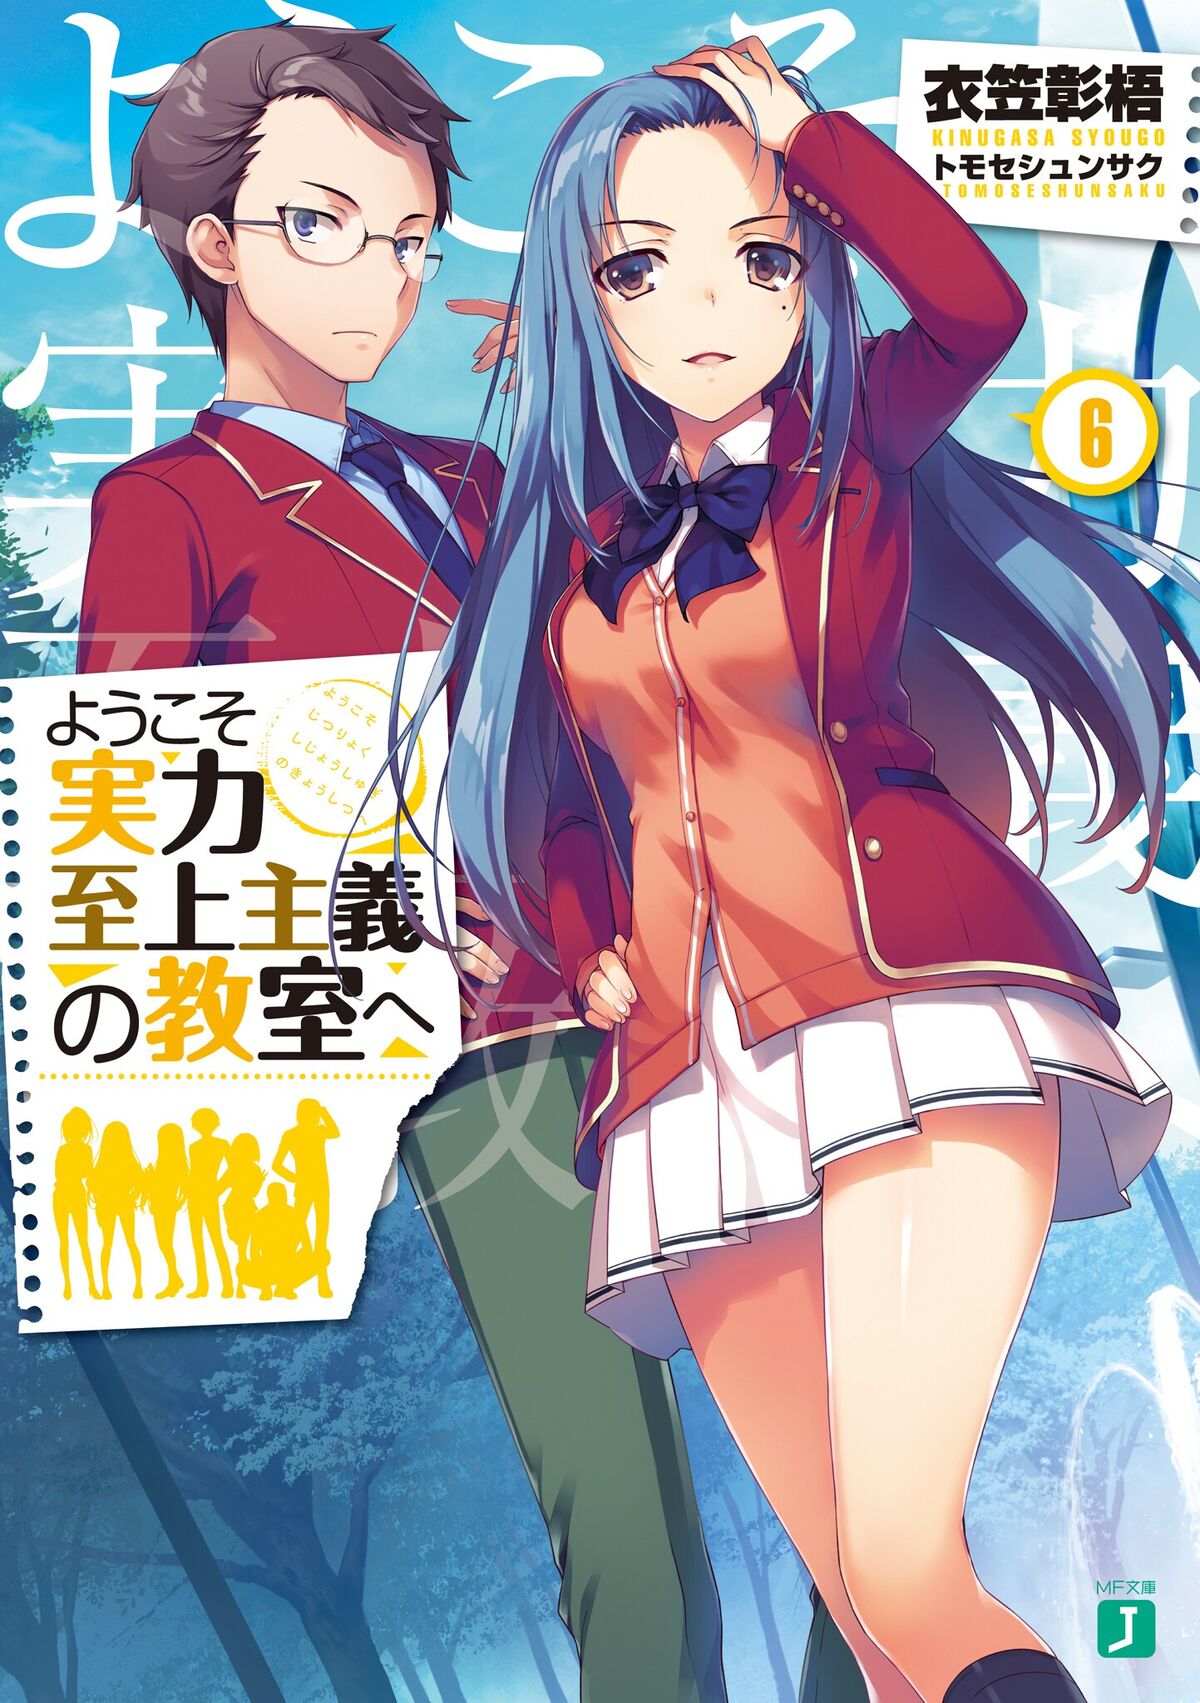 Light Novel Volume 4, You-Zitsu Wiki